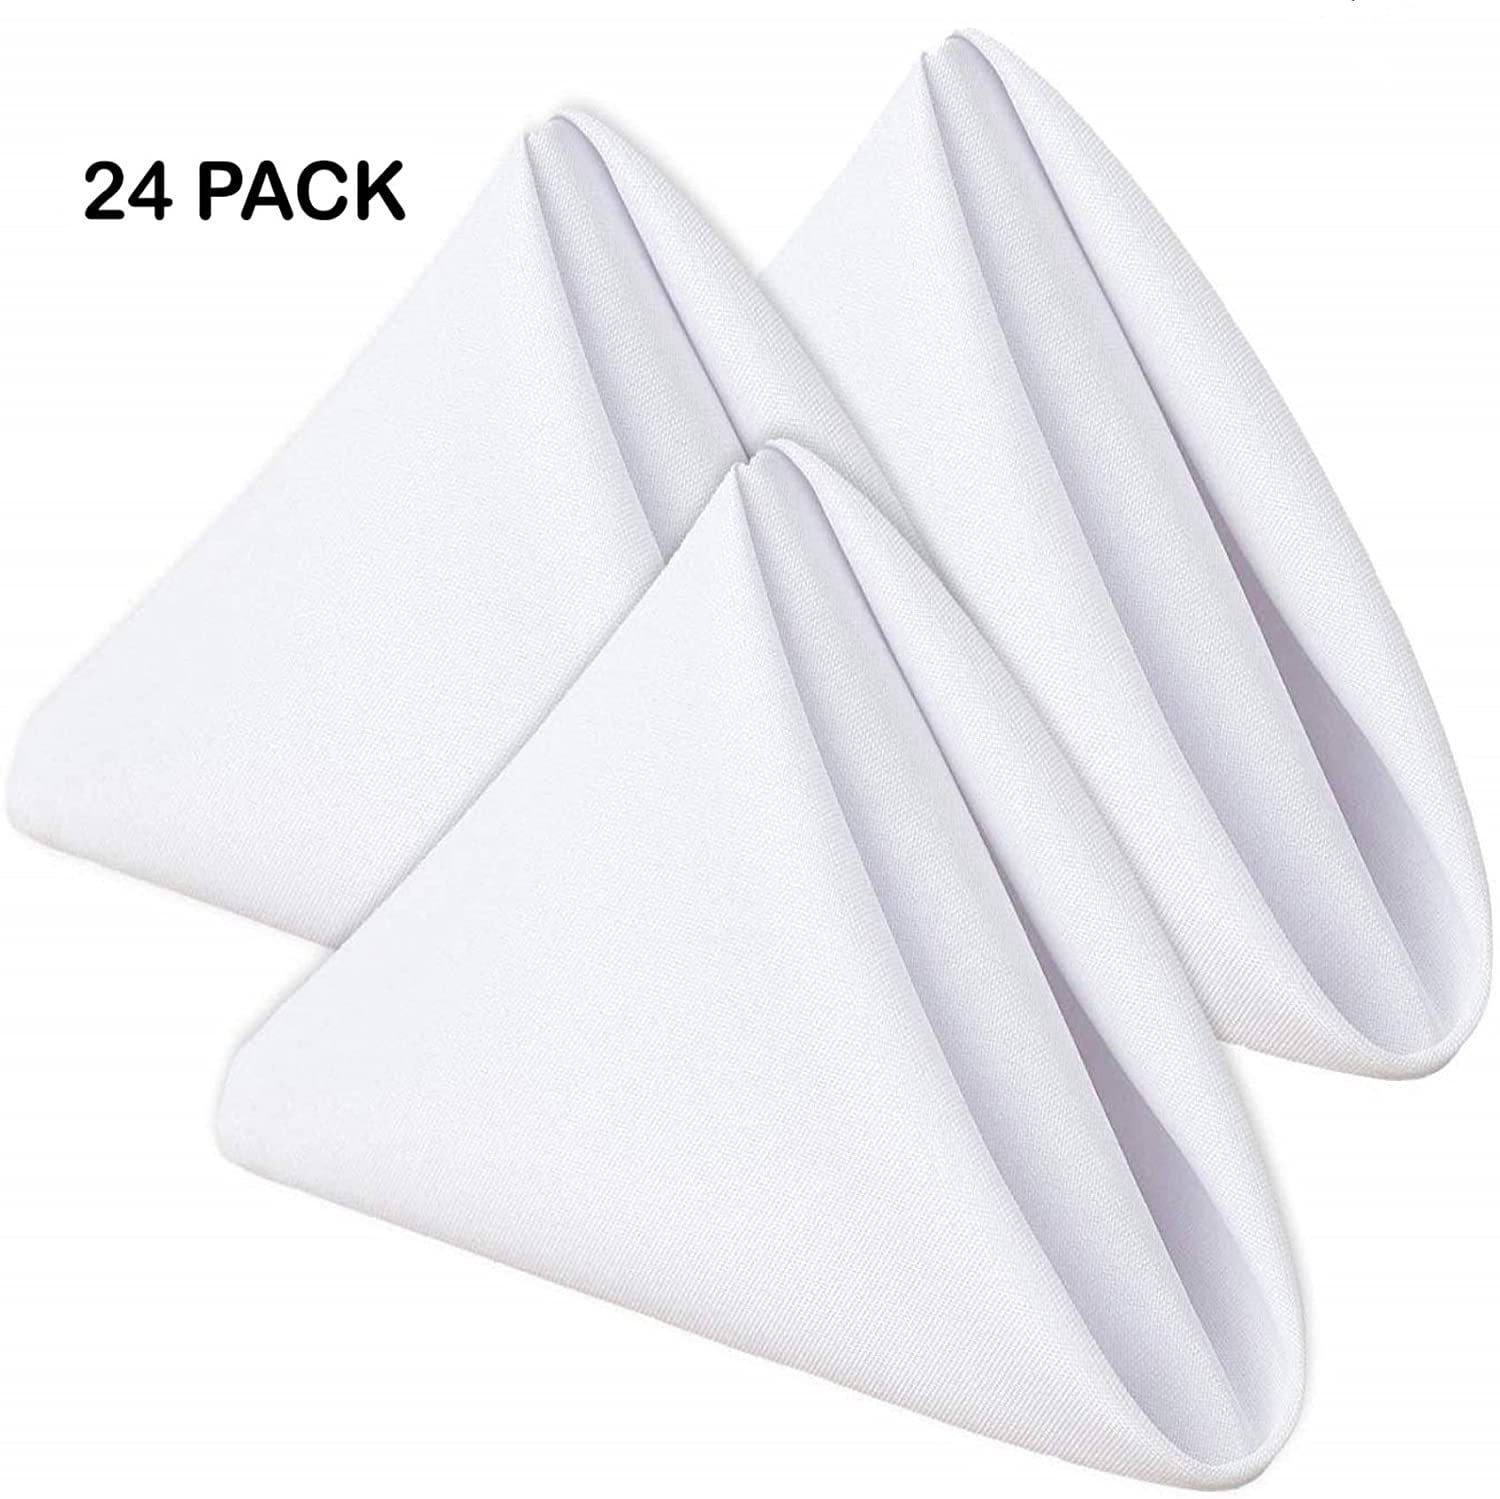 12 pcs 17"x17" inch Cotton Cloth Napkin Wedding Linen Restaurant White 